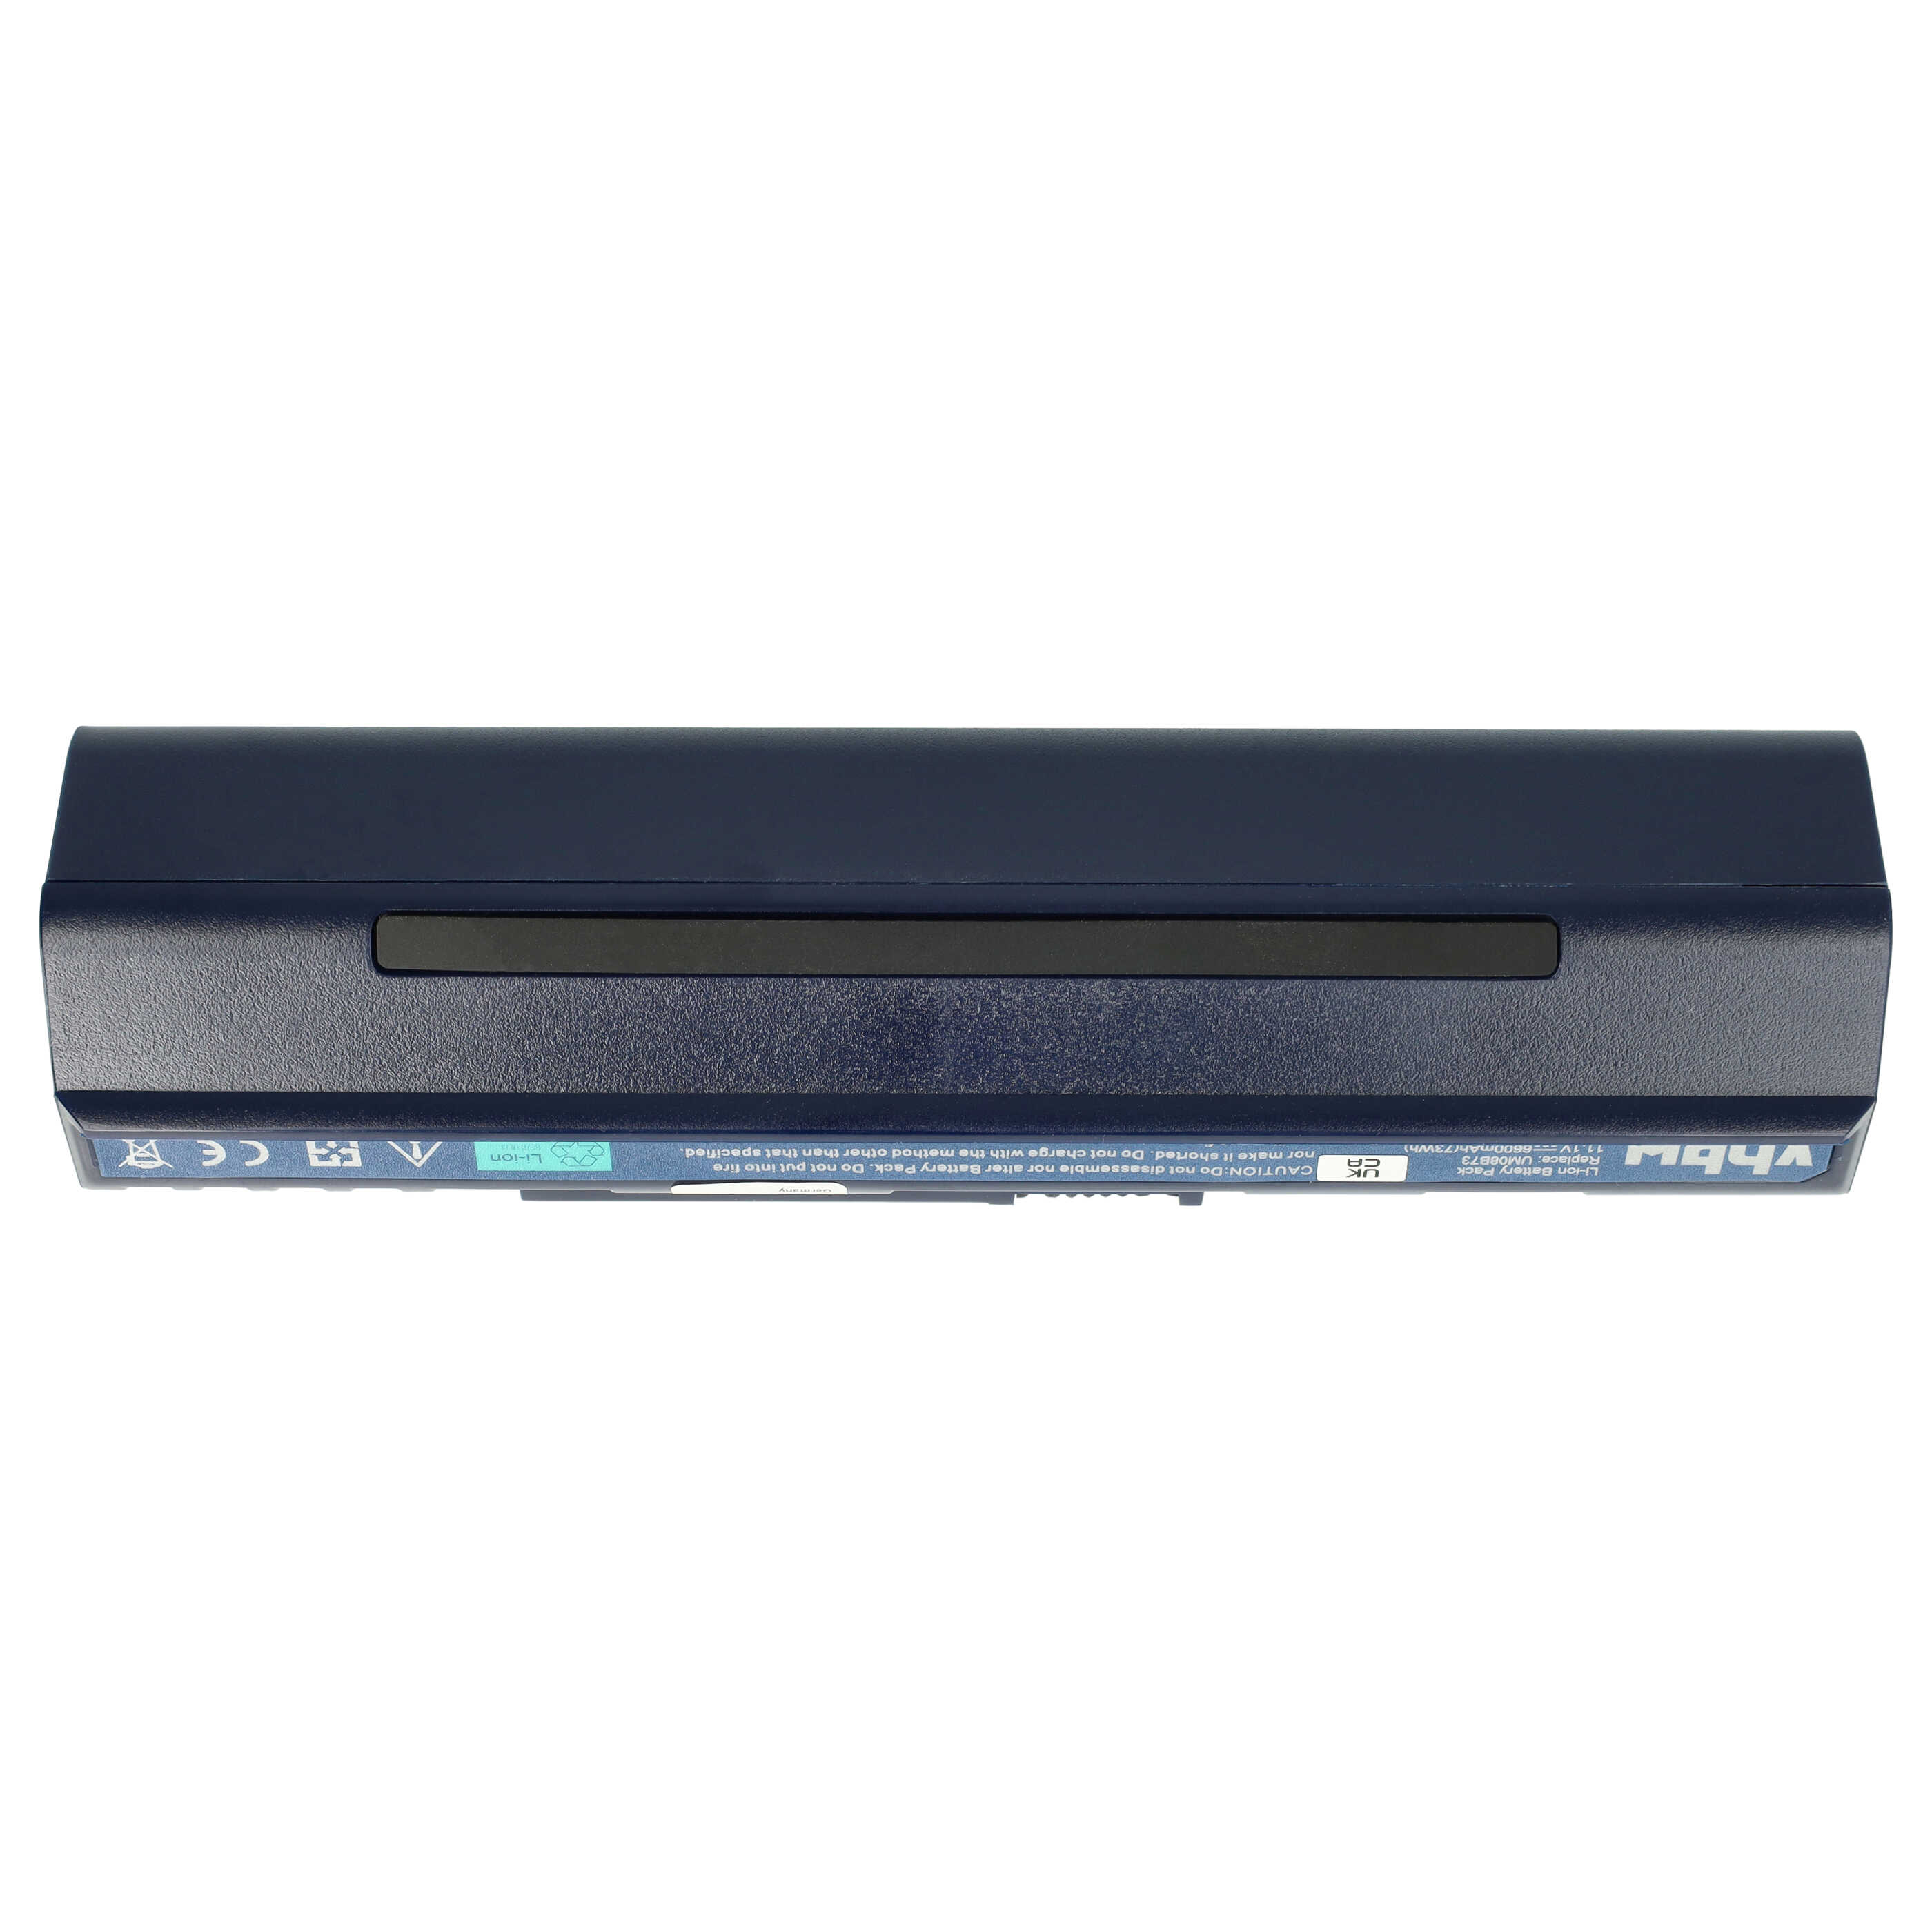 Notebook Battery Replacement for Acer 934T2780F, BT.00607.039, BT.00605.035 - 6600mAh 11.1V Li-Ion, dark blue